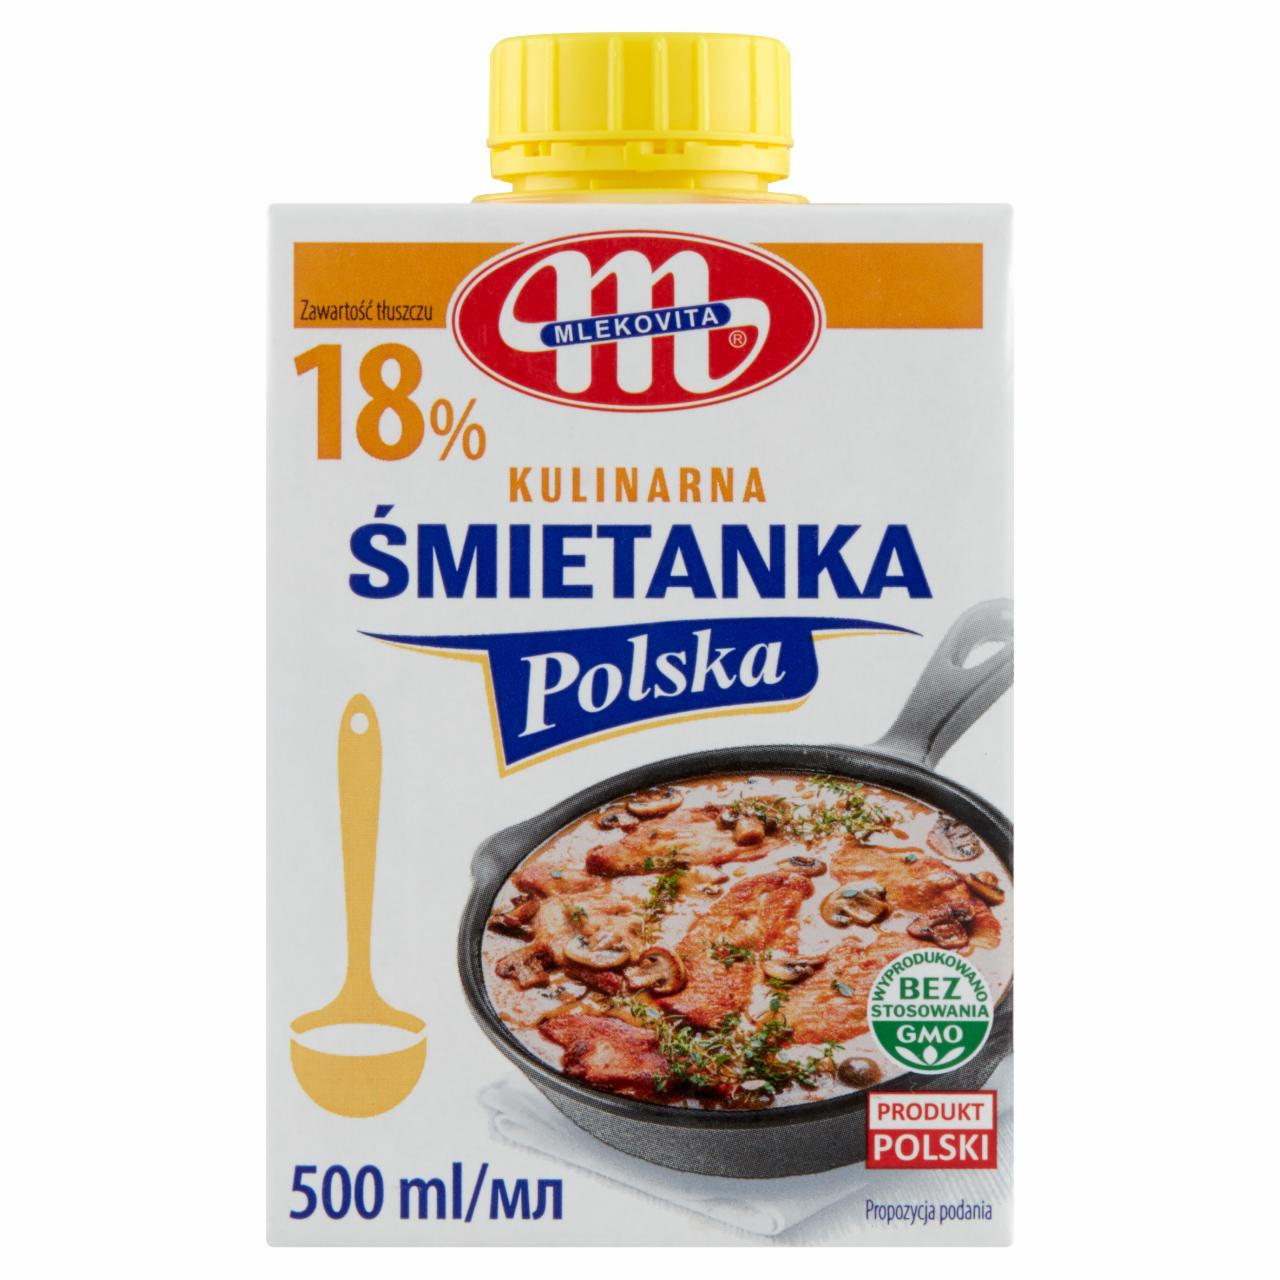 Zdjęcia - Mlekovita Śmietanka Polska kulinarna 18 % 500 ml